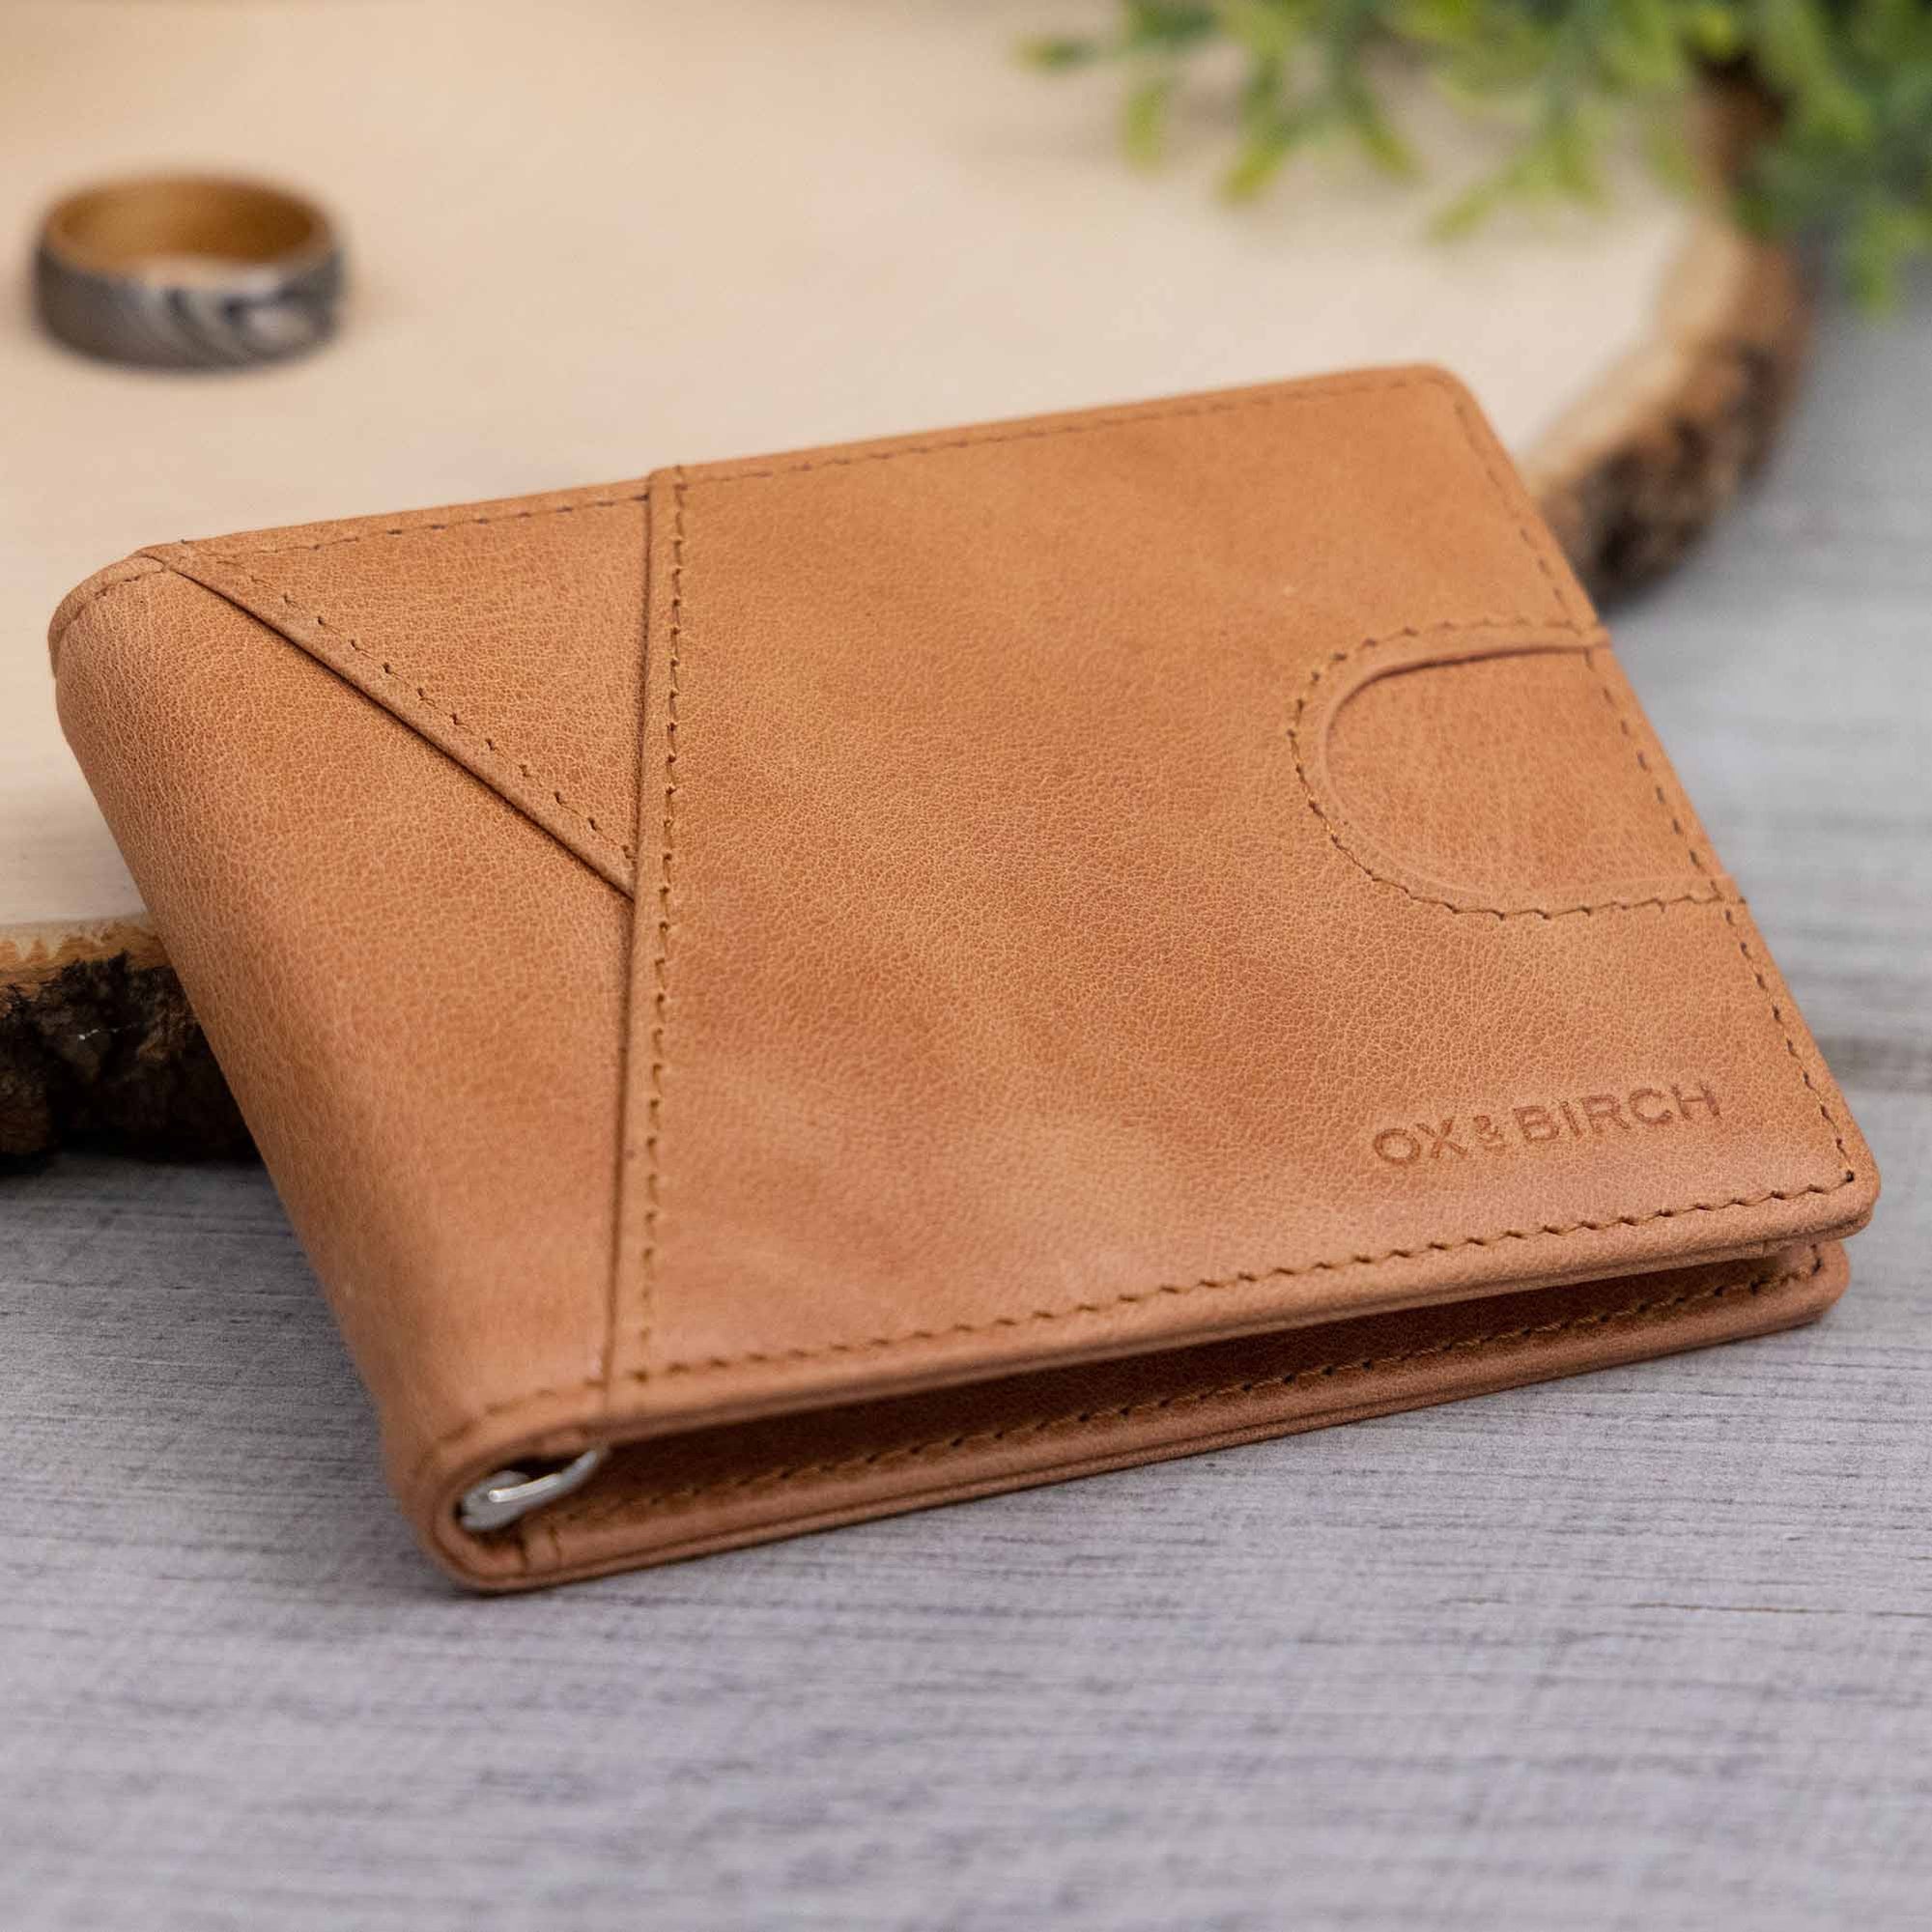 Saddle Brown Leather Slim Wallet | Wyatt - Ox & Birch